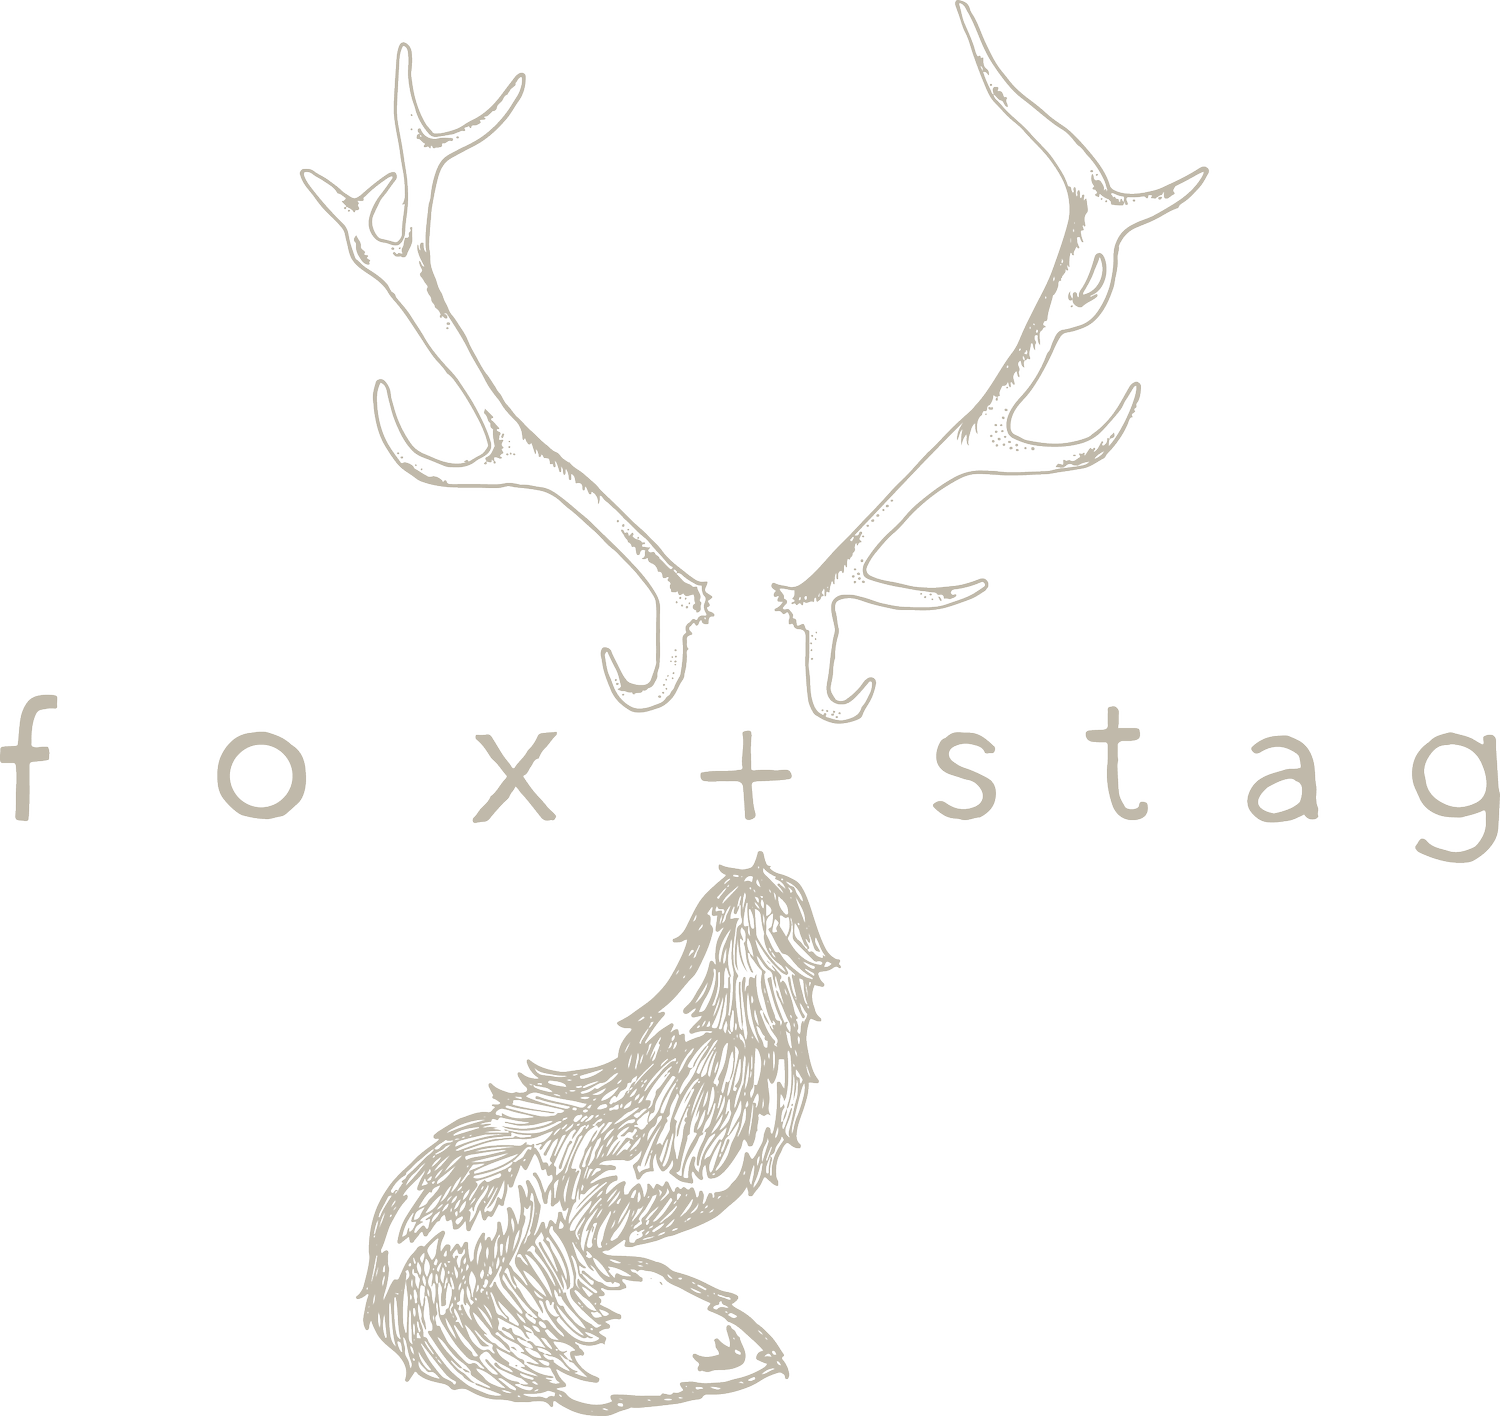 Fox + Stag